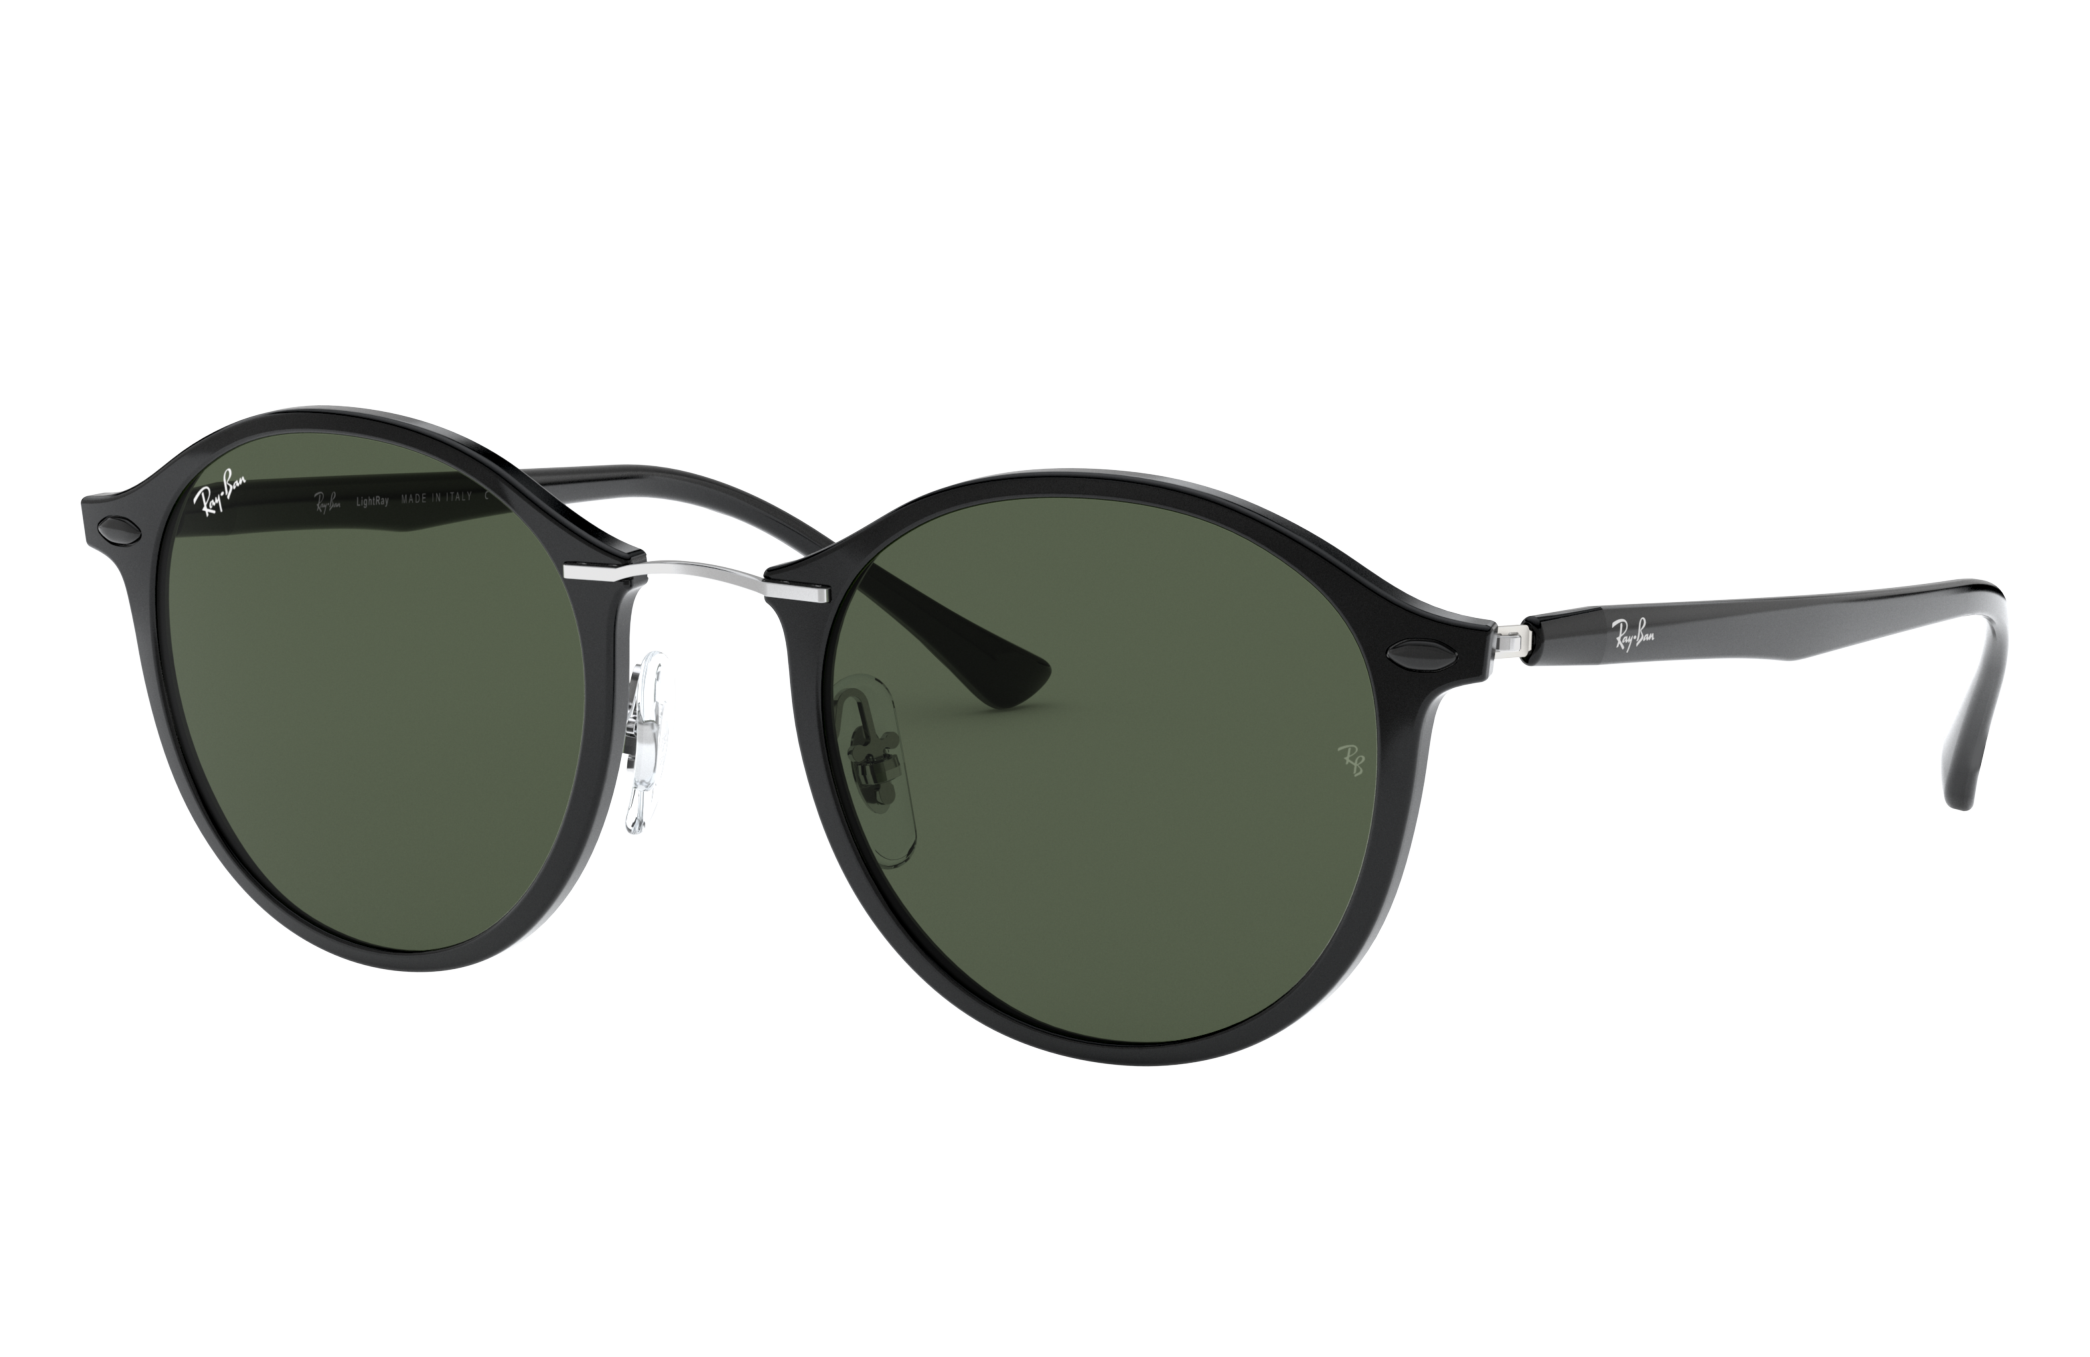 Memo Aja Burma Rb4242 Sunglasses in Black and Green | Ray-Ban®